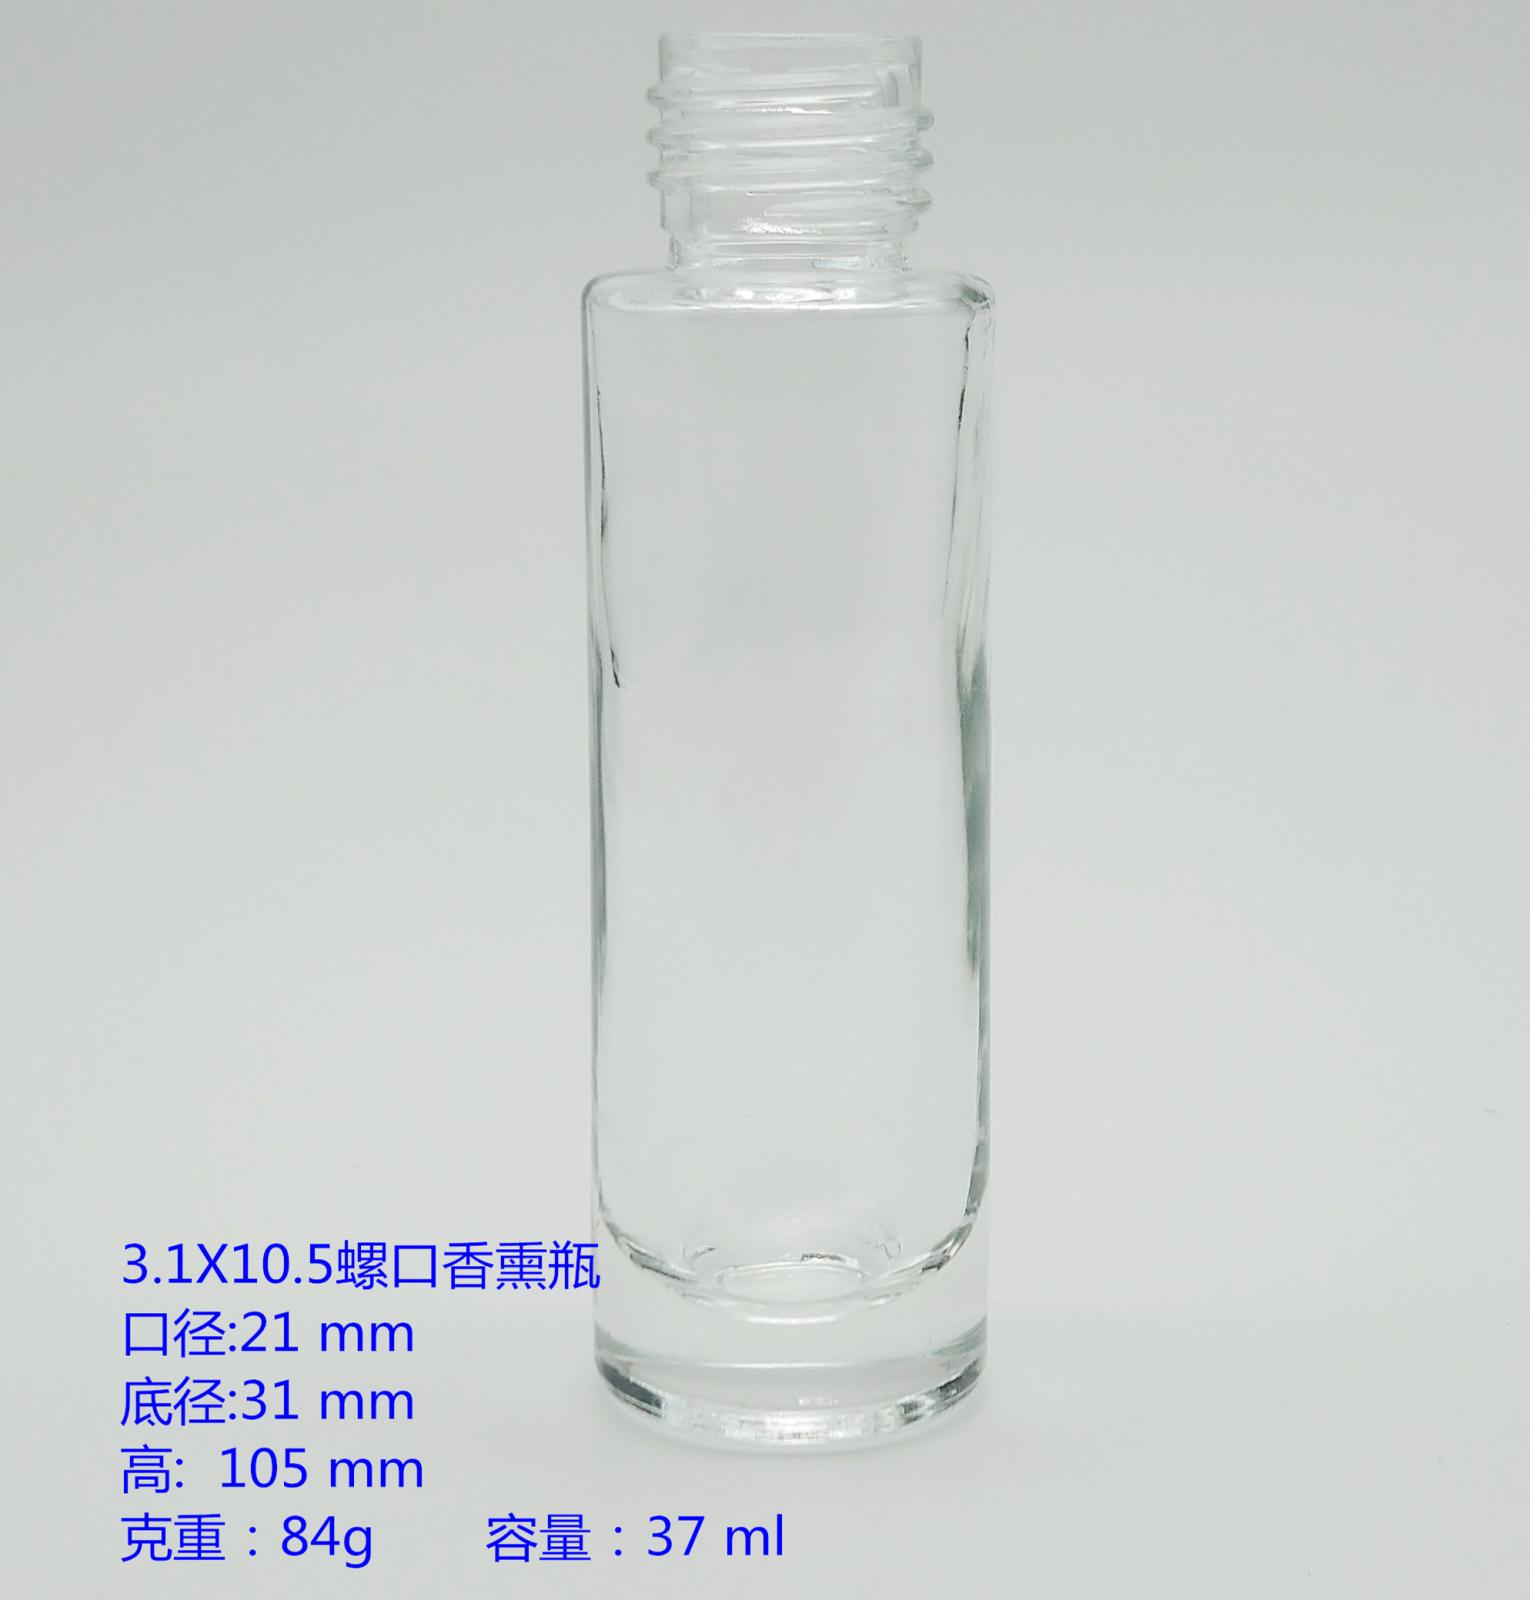 3.1X10.5螺口香熏瓶